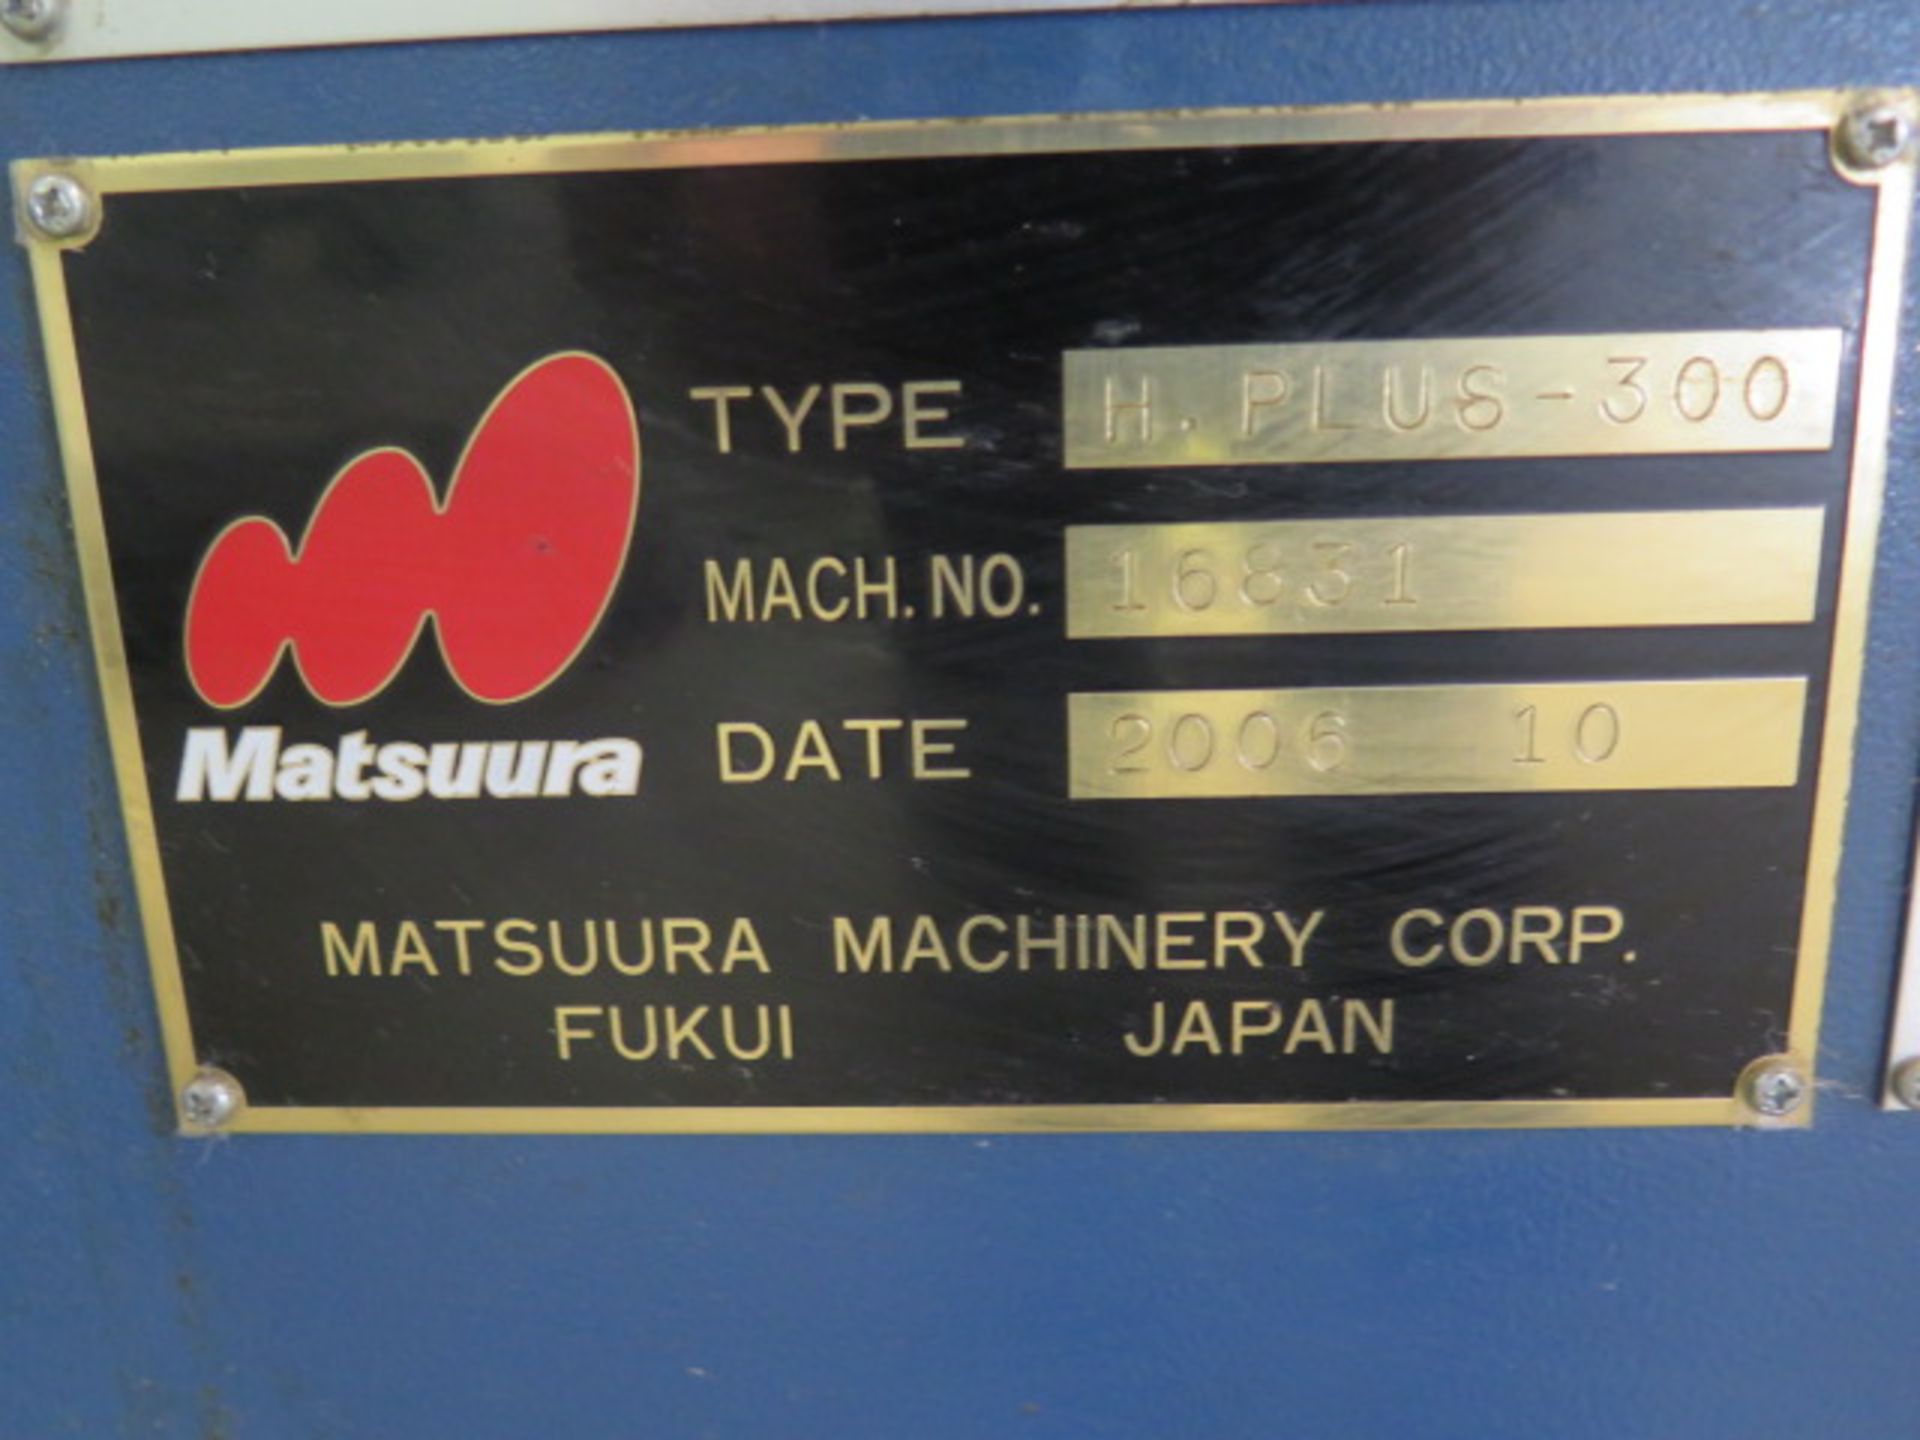 2006 Matsuura H-PLUS-300 11-Pallet CNC Horizontal Machining Center s/n 16831, SOLD AS IS - Image 21 of 22